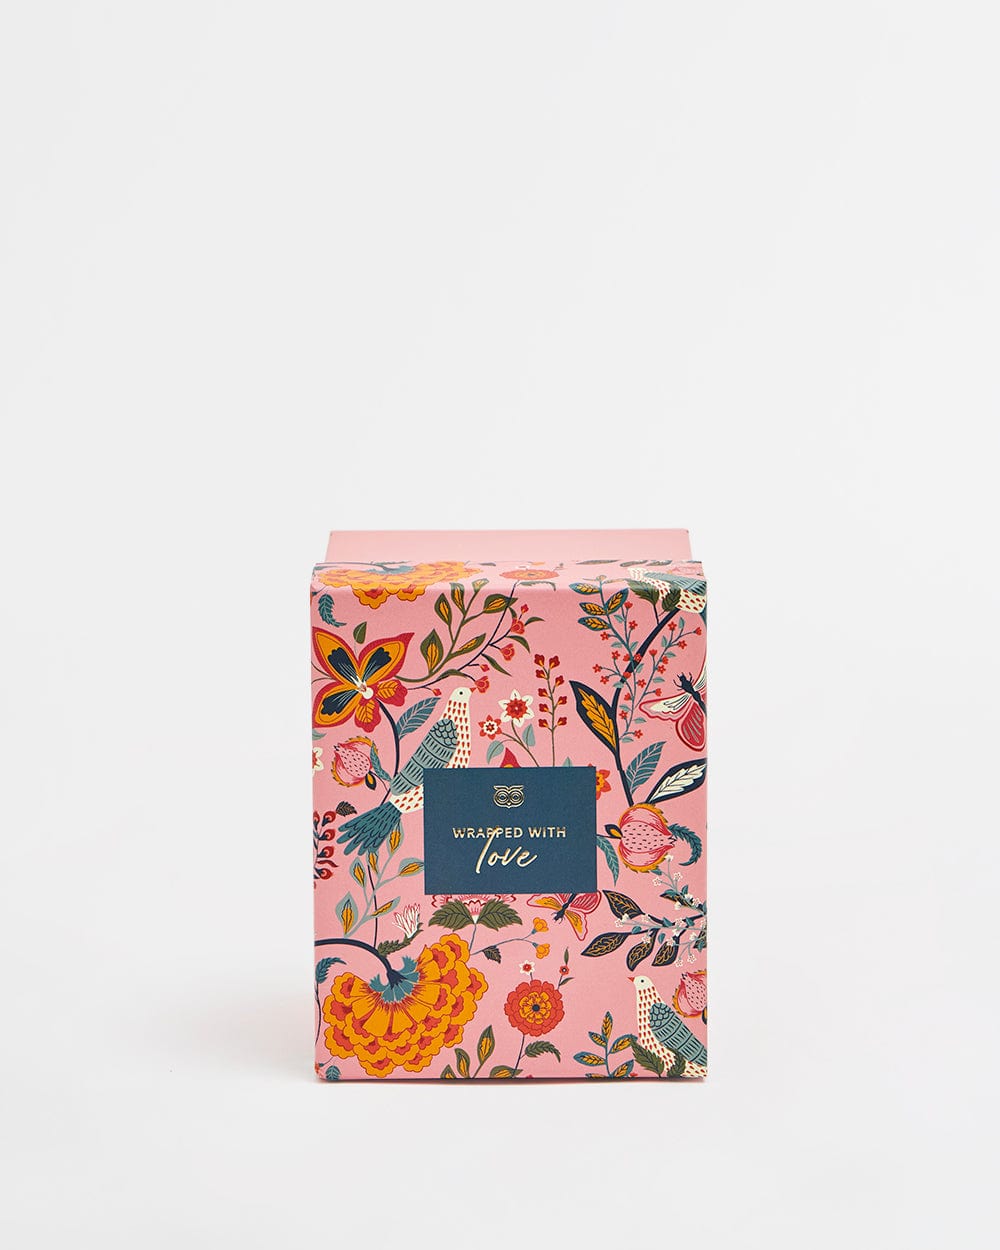 Chumbak Bohemian Paisleys Small gift box-Pink